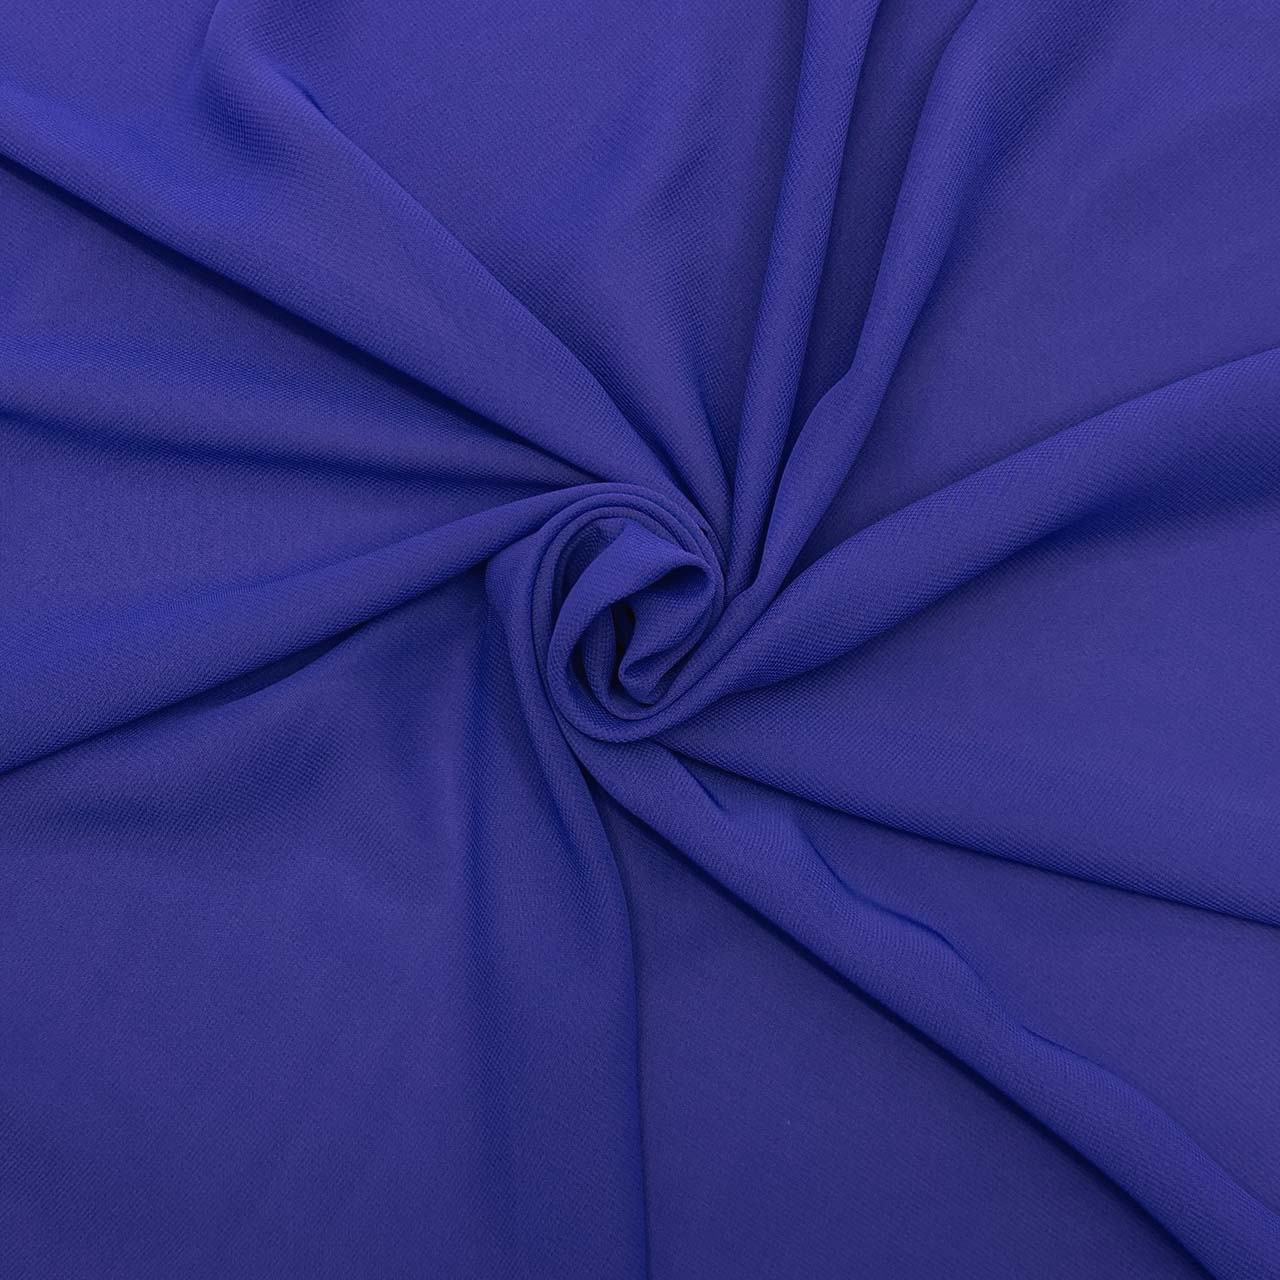 polyester chiffon cobalt fabric